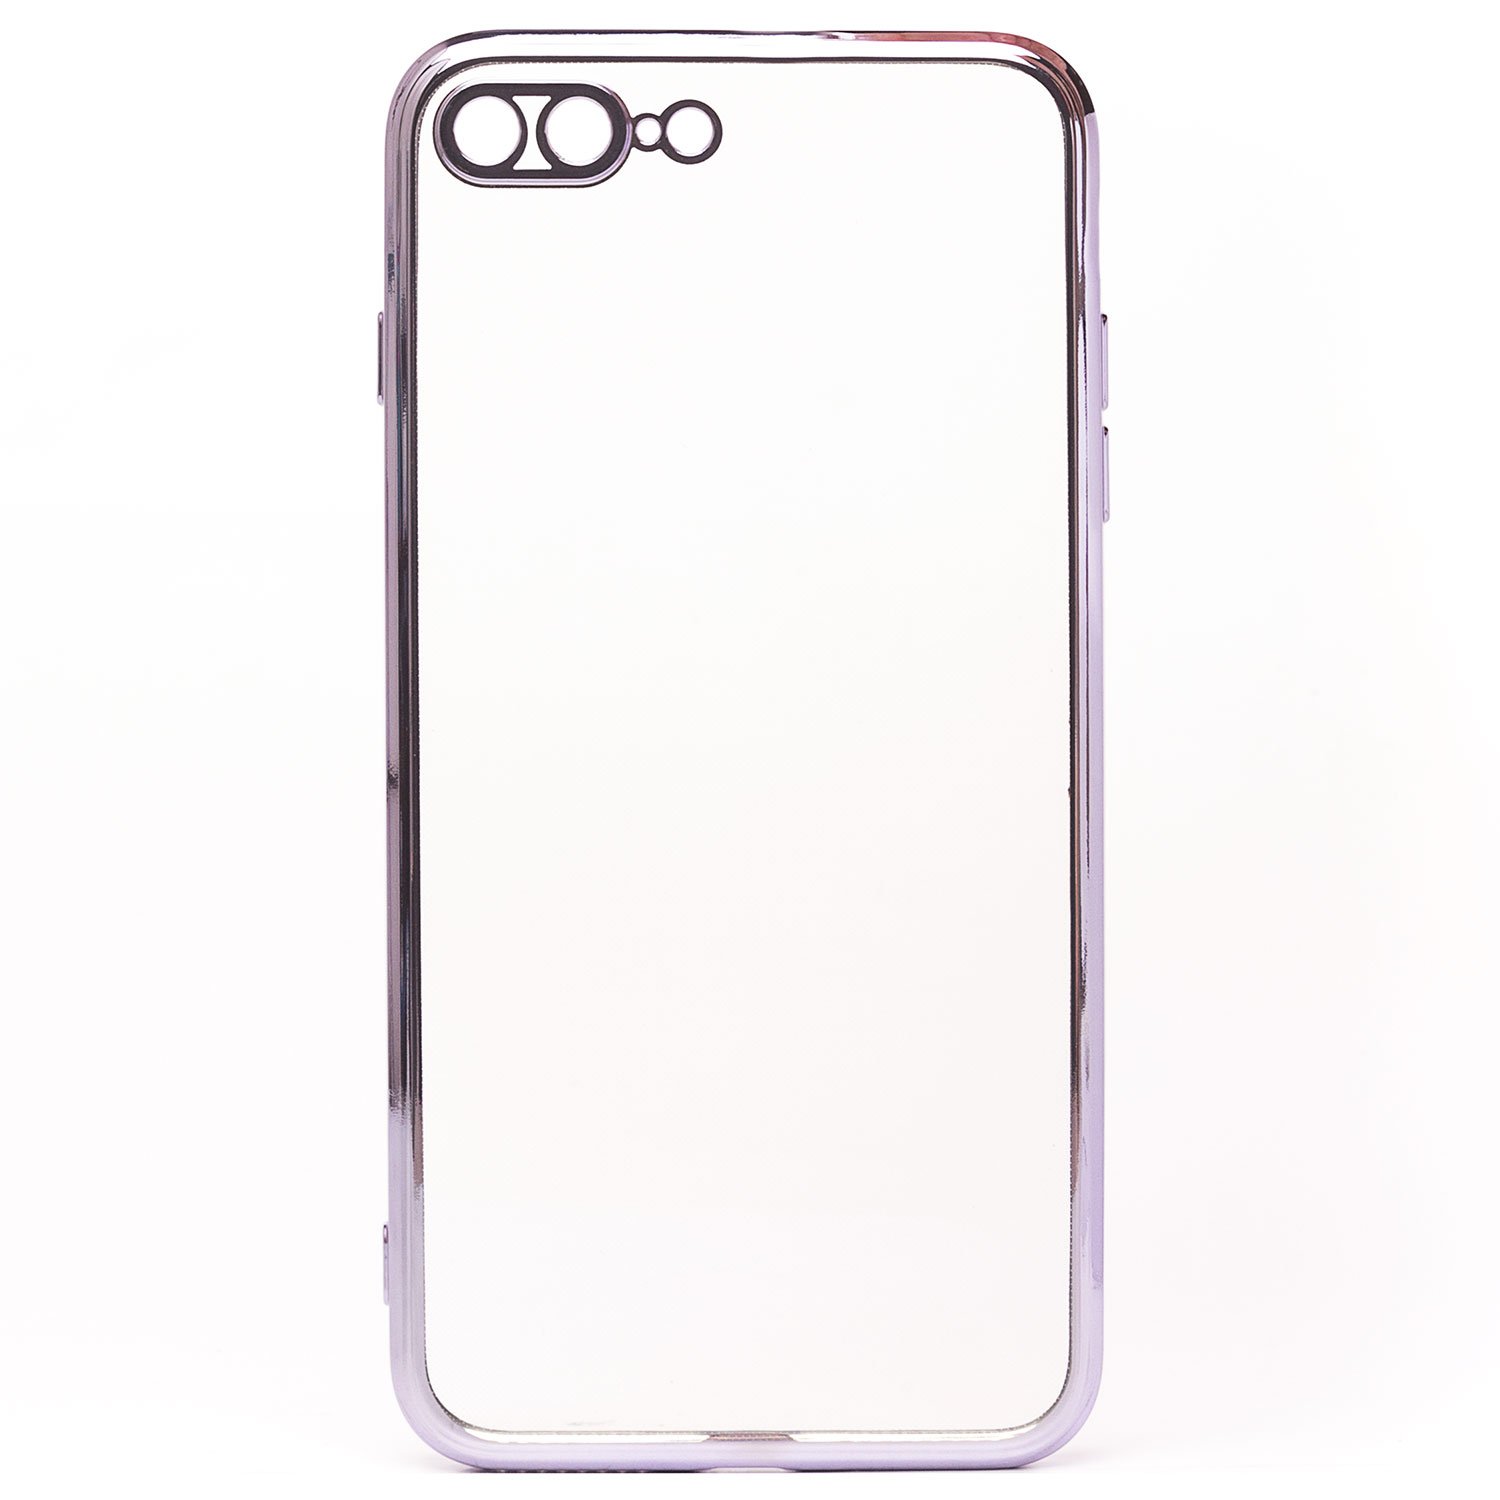 Чехол-накладка SC215 для смартфона Apple iPhone 7 Plus/iPhone 8 Plus, прозрачный/розовый (126484), цвет прозрачный/розовый - фото 1